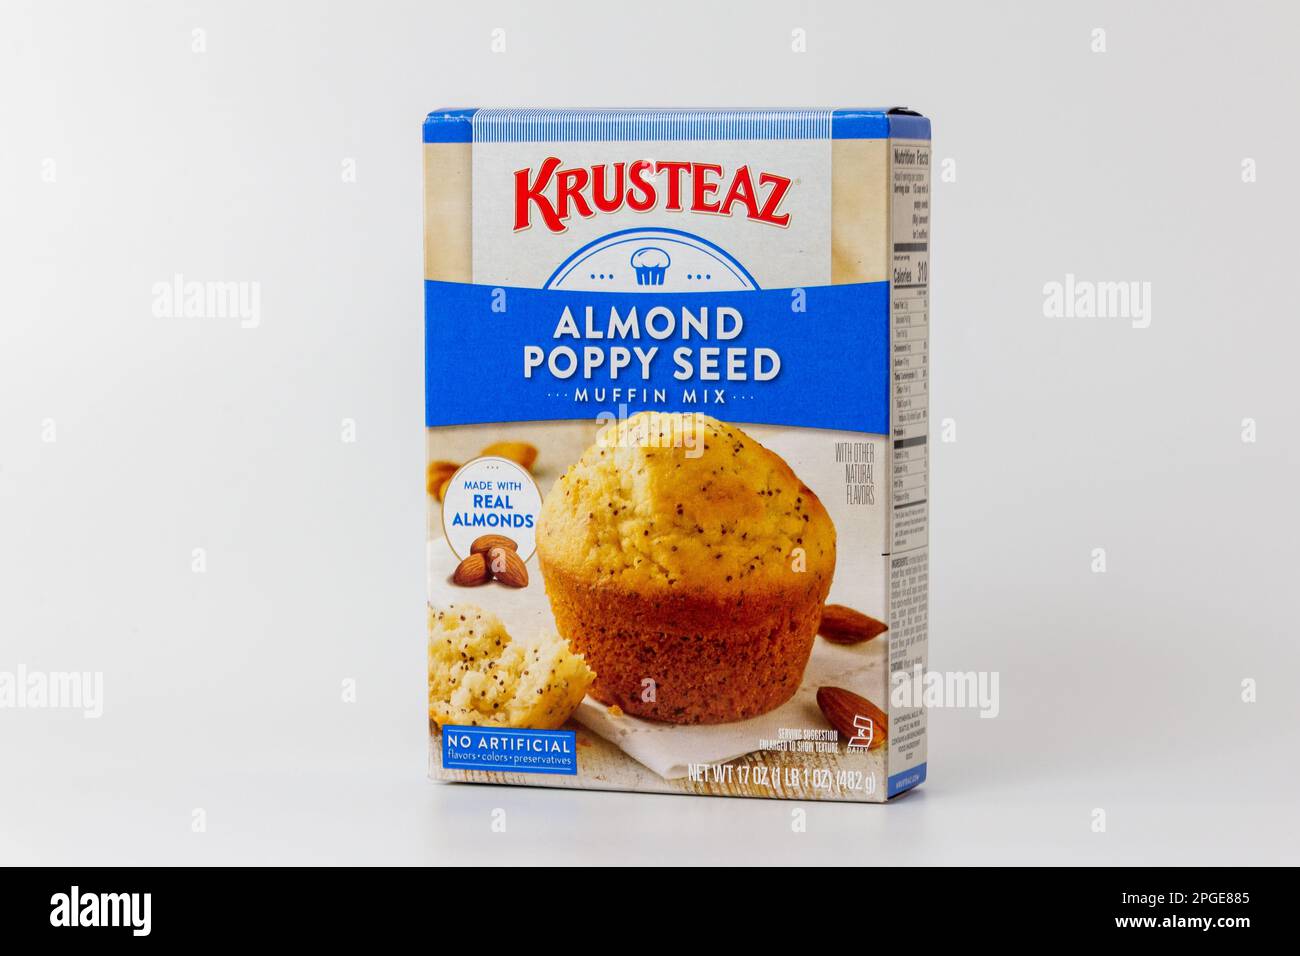 STILLWATER, MN, USA - 3. MÄRZ 2023: Krusteaz Almond Poppy Seed-Paket und Markenlogo. Stockfoto